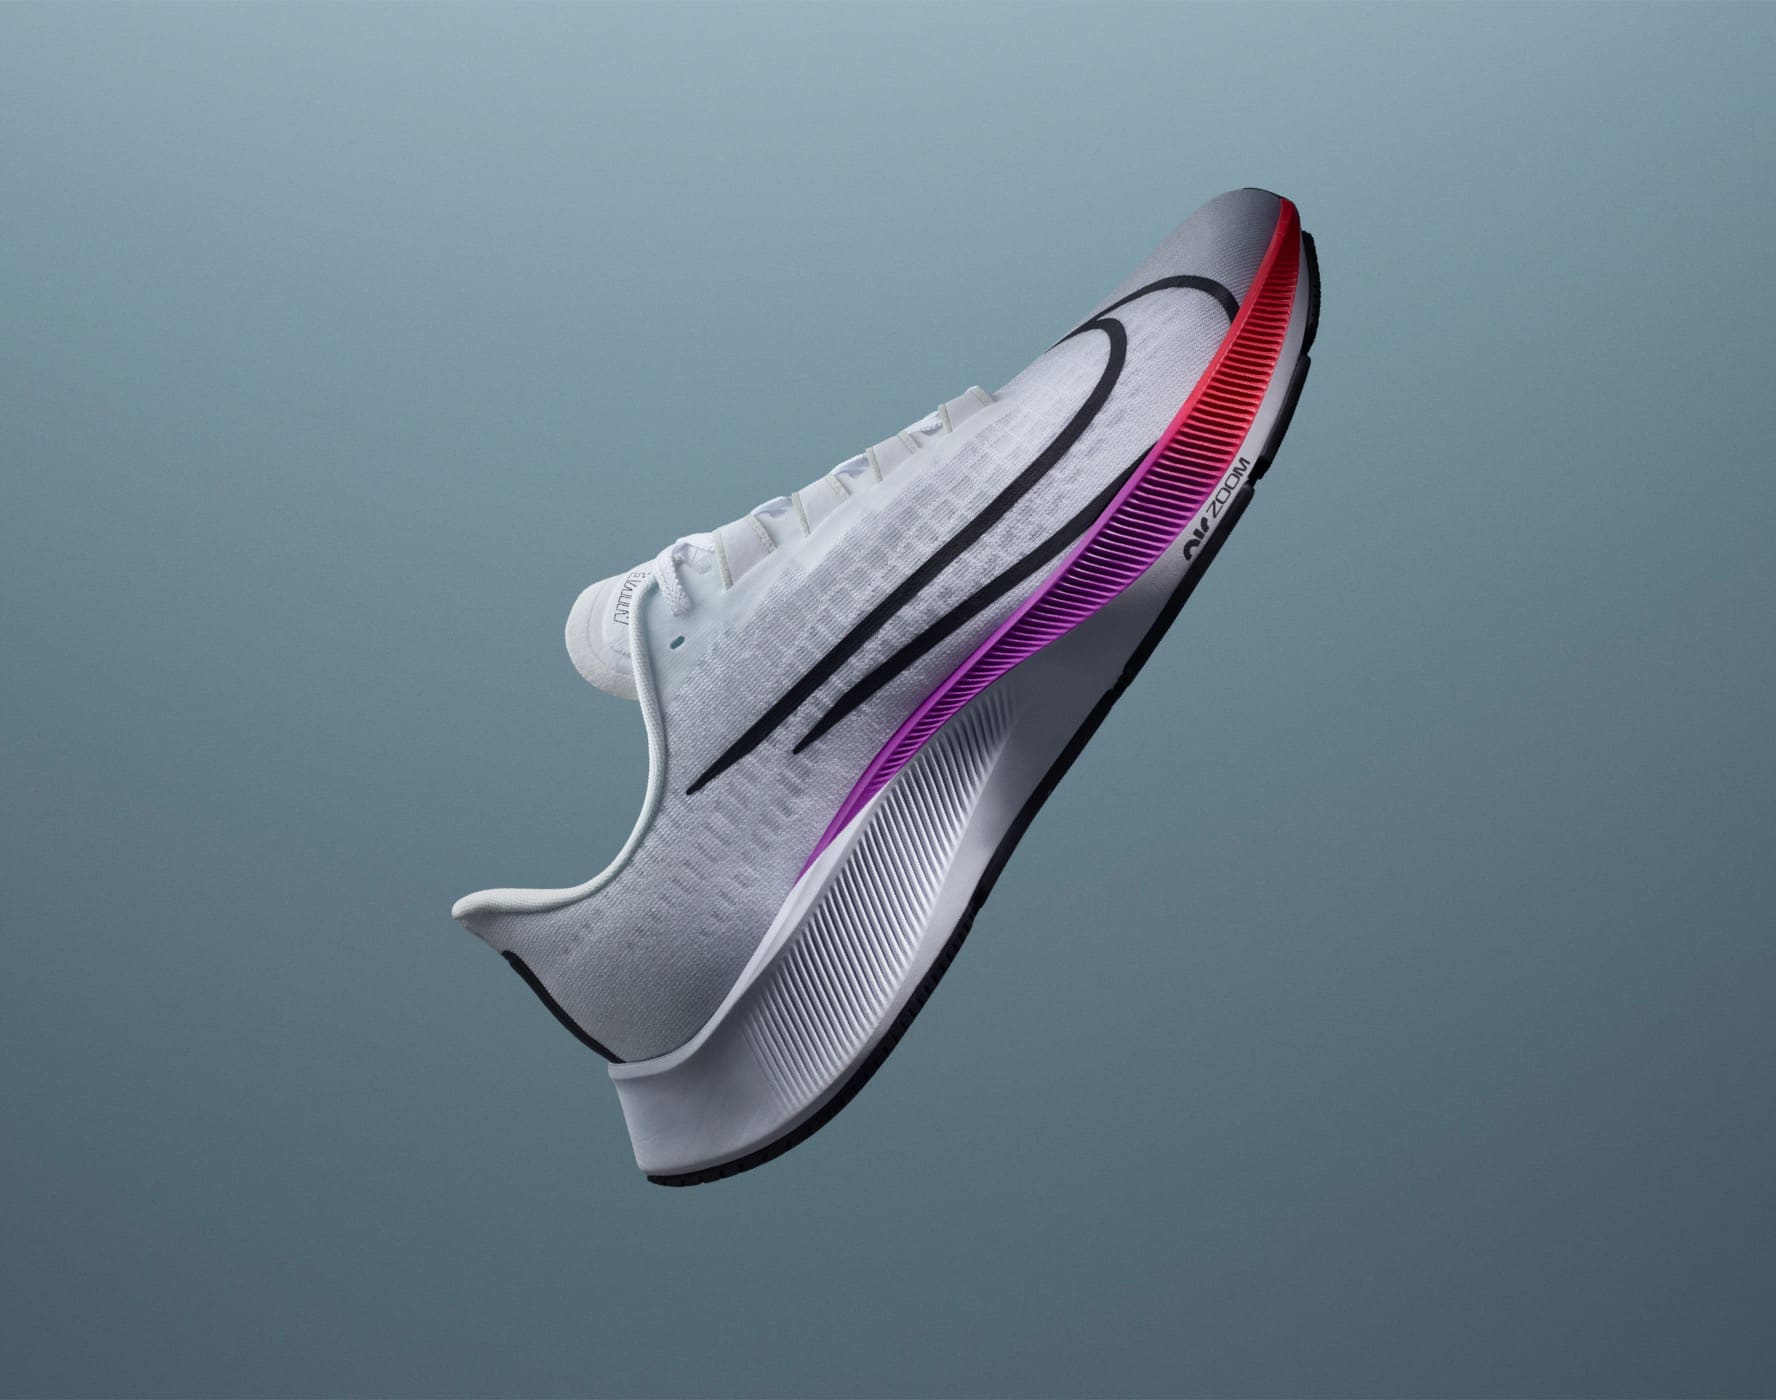 verdrievoudigen Individualiteit Kreta Nike Vaporfly. De nieuwe Vaporfly NEXT%. Nike NL